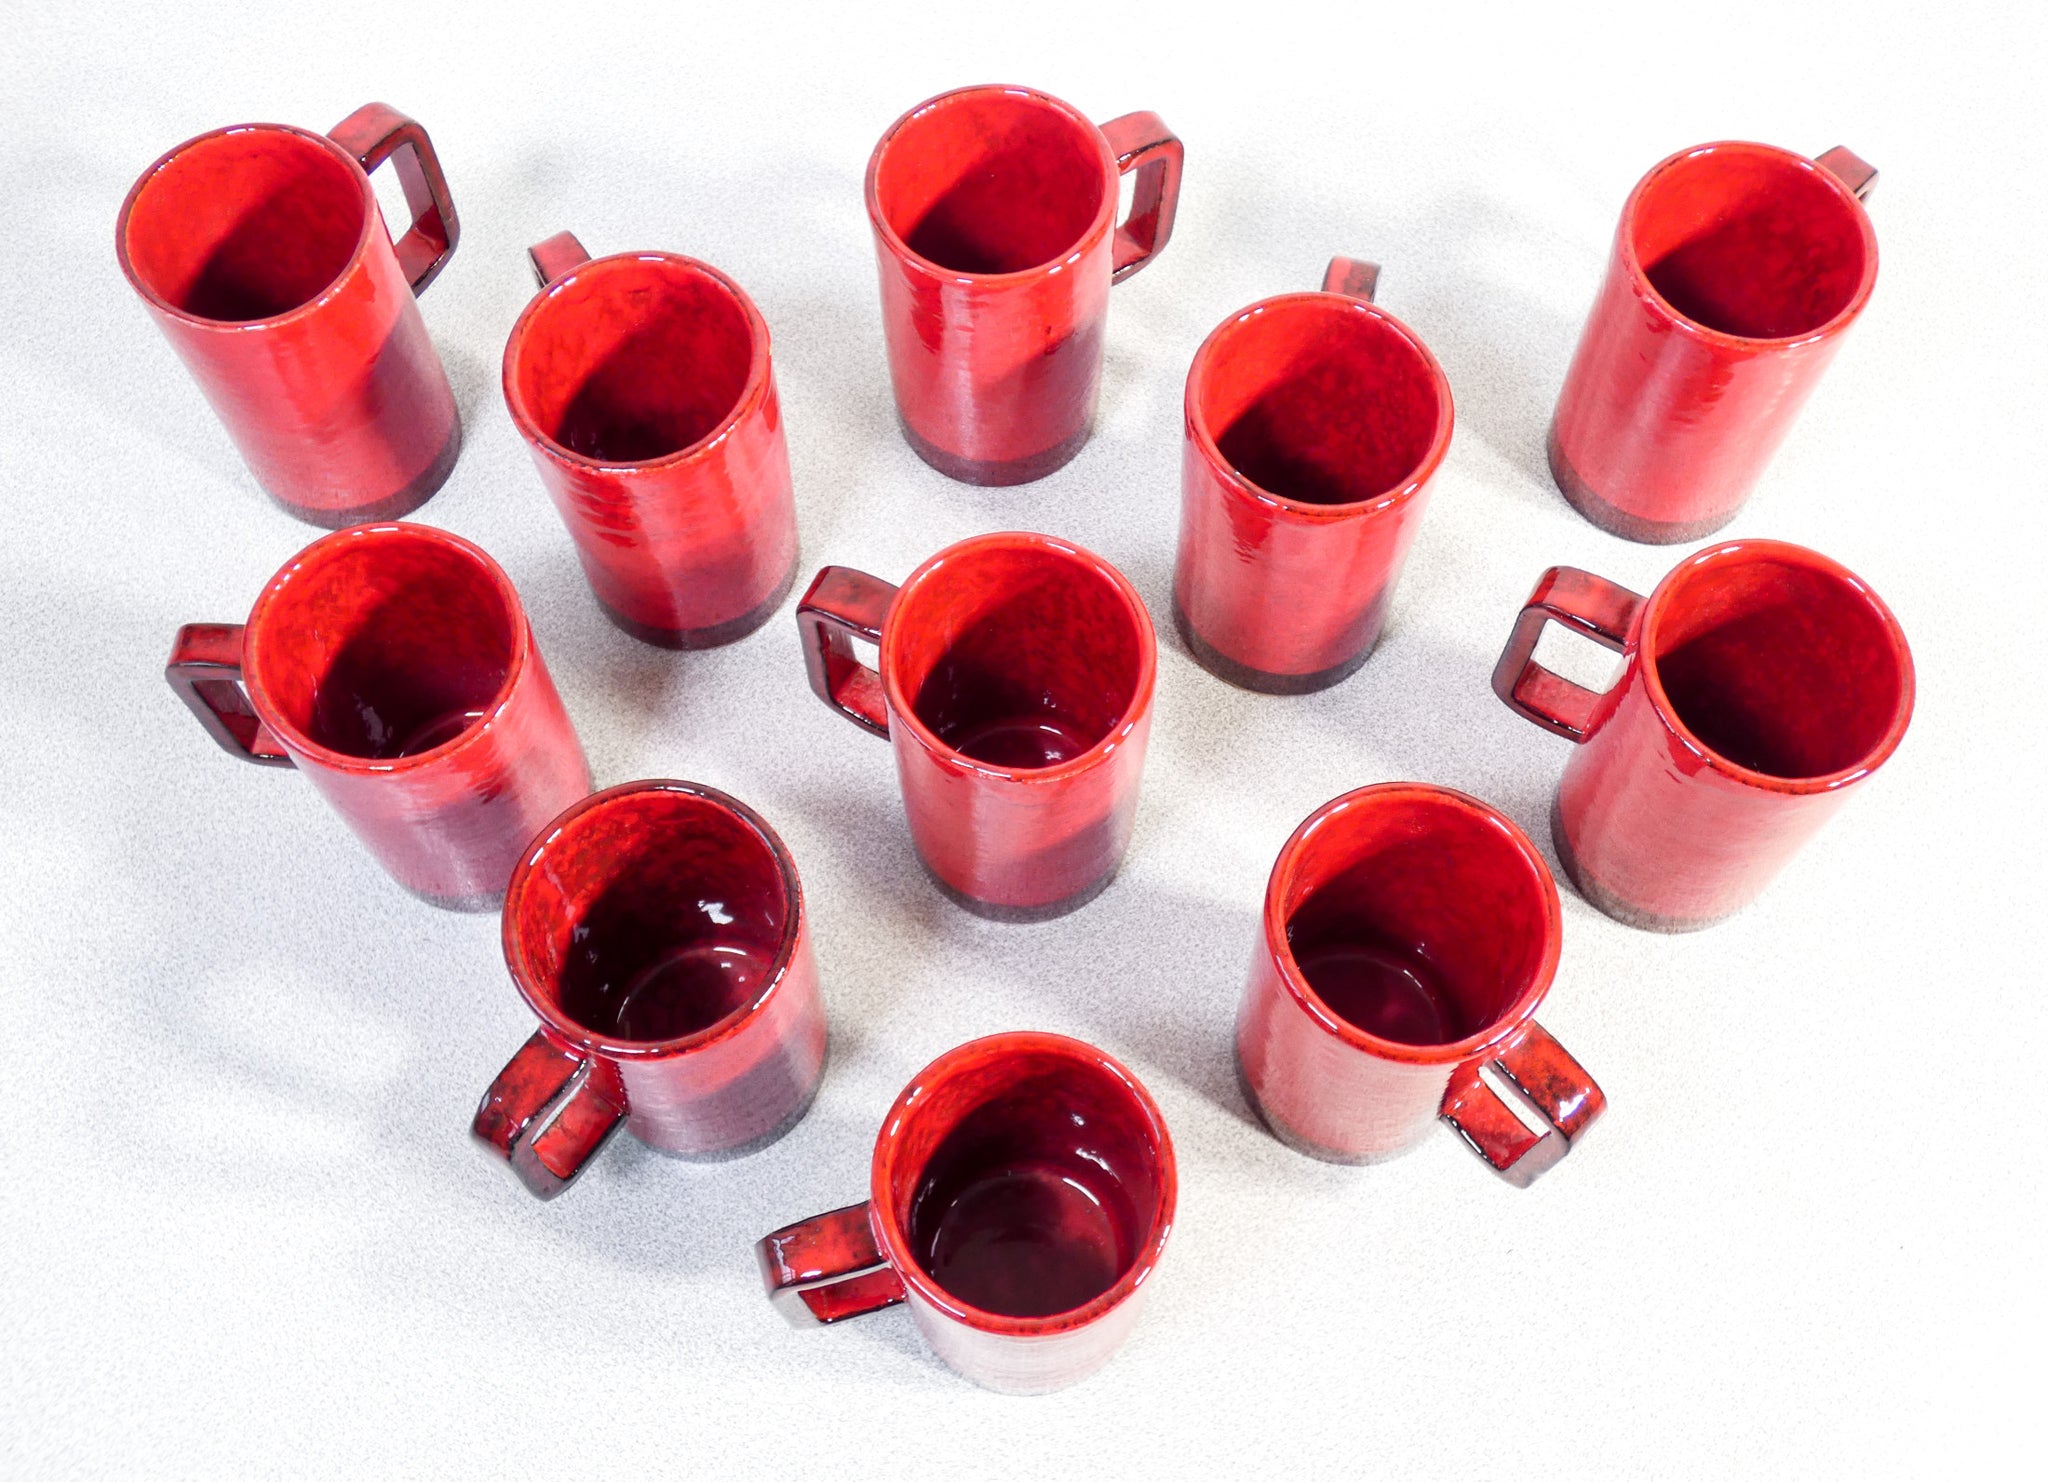 set 11 tazze maiolica smaltata rossa keramos di ghigo ceramica epoca 1950s